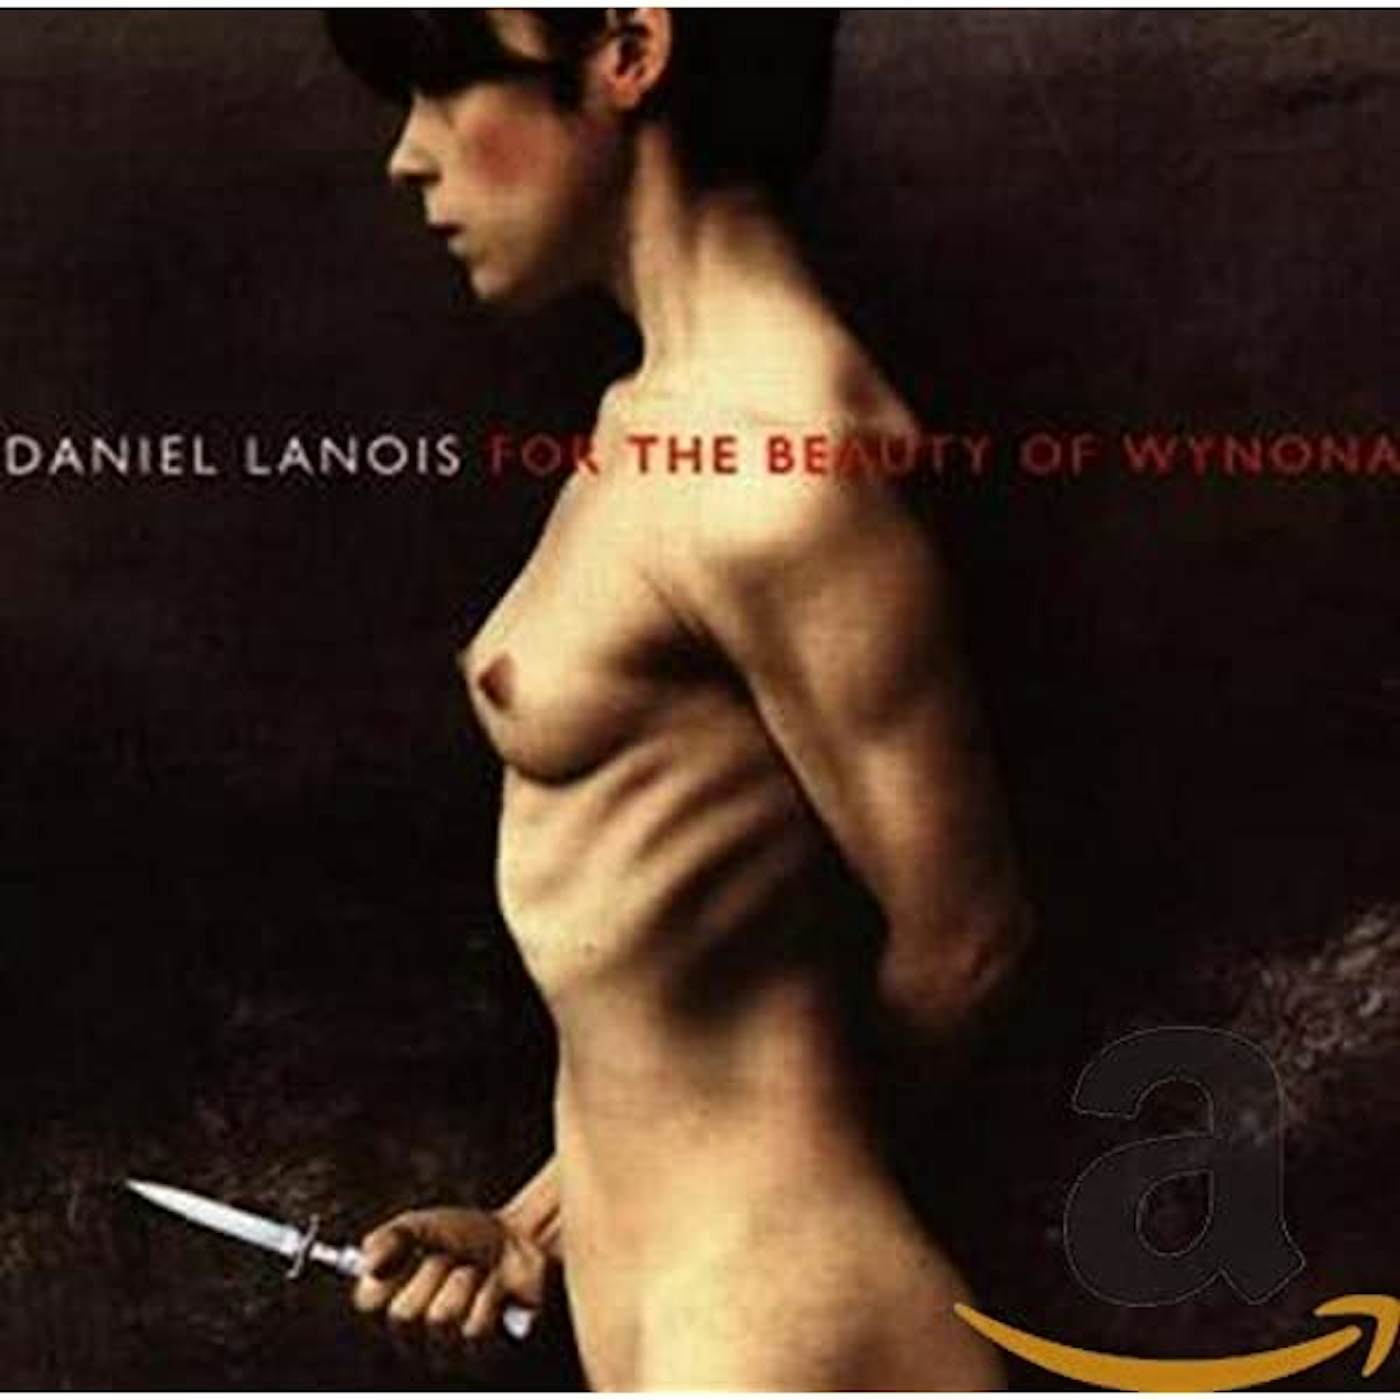 Daniel Lanois For The Beauty Of Wynona Vinyl Record